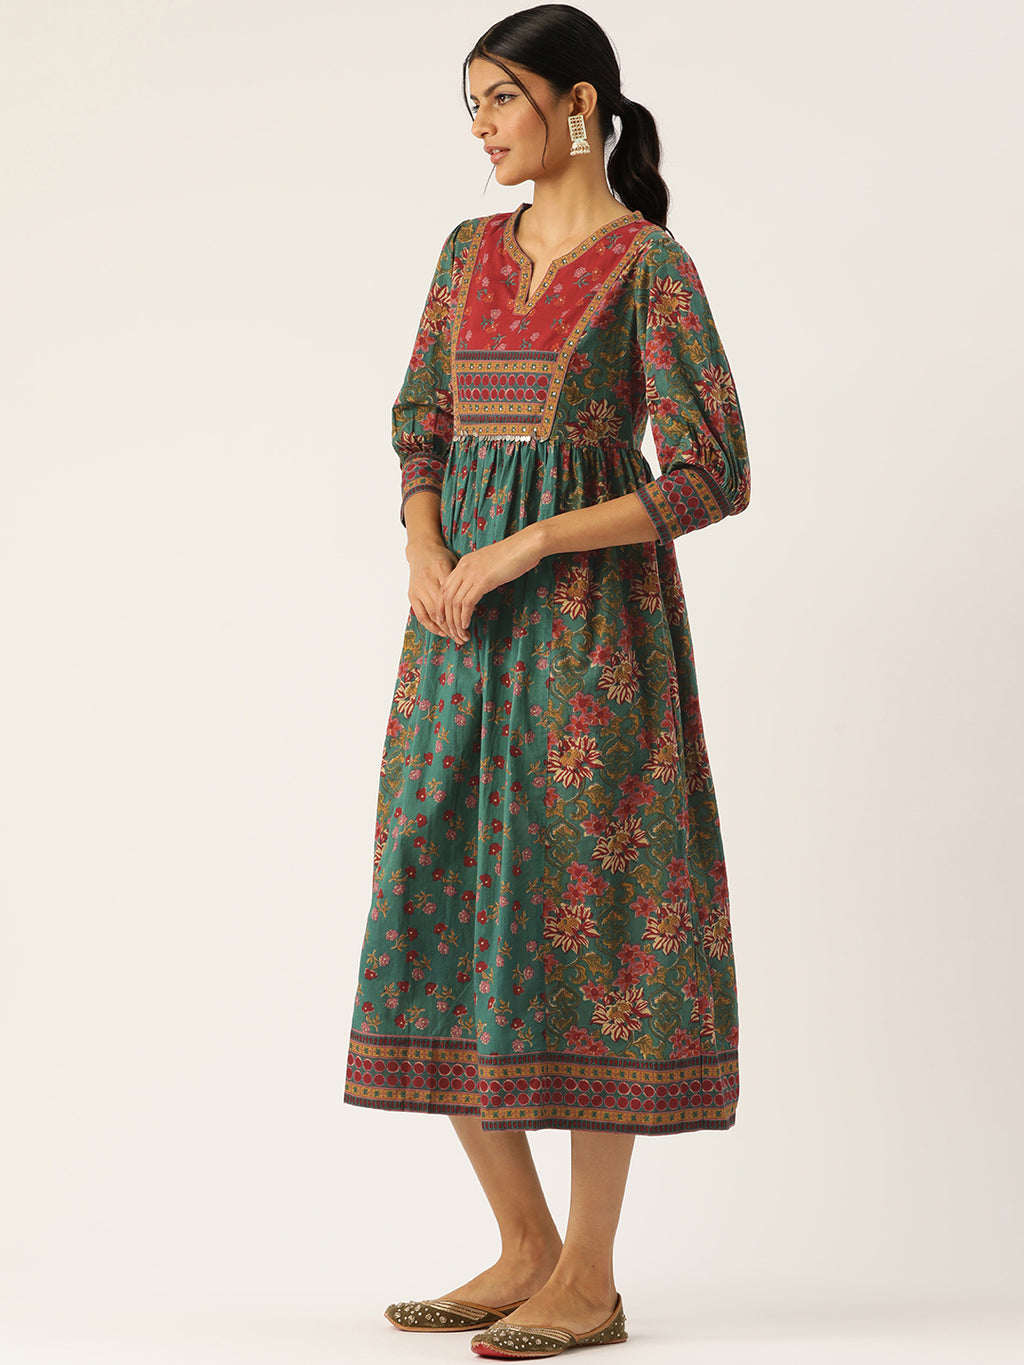 Green cotton printed kurti dress